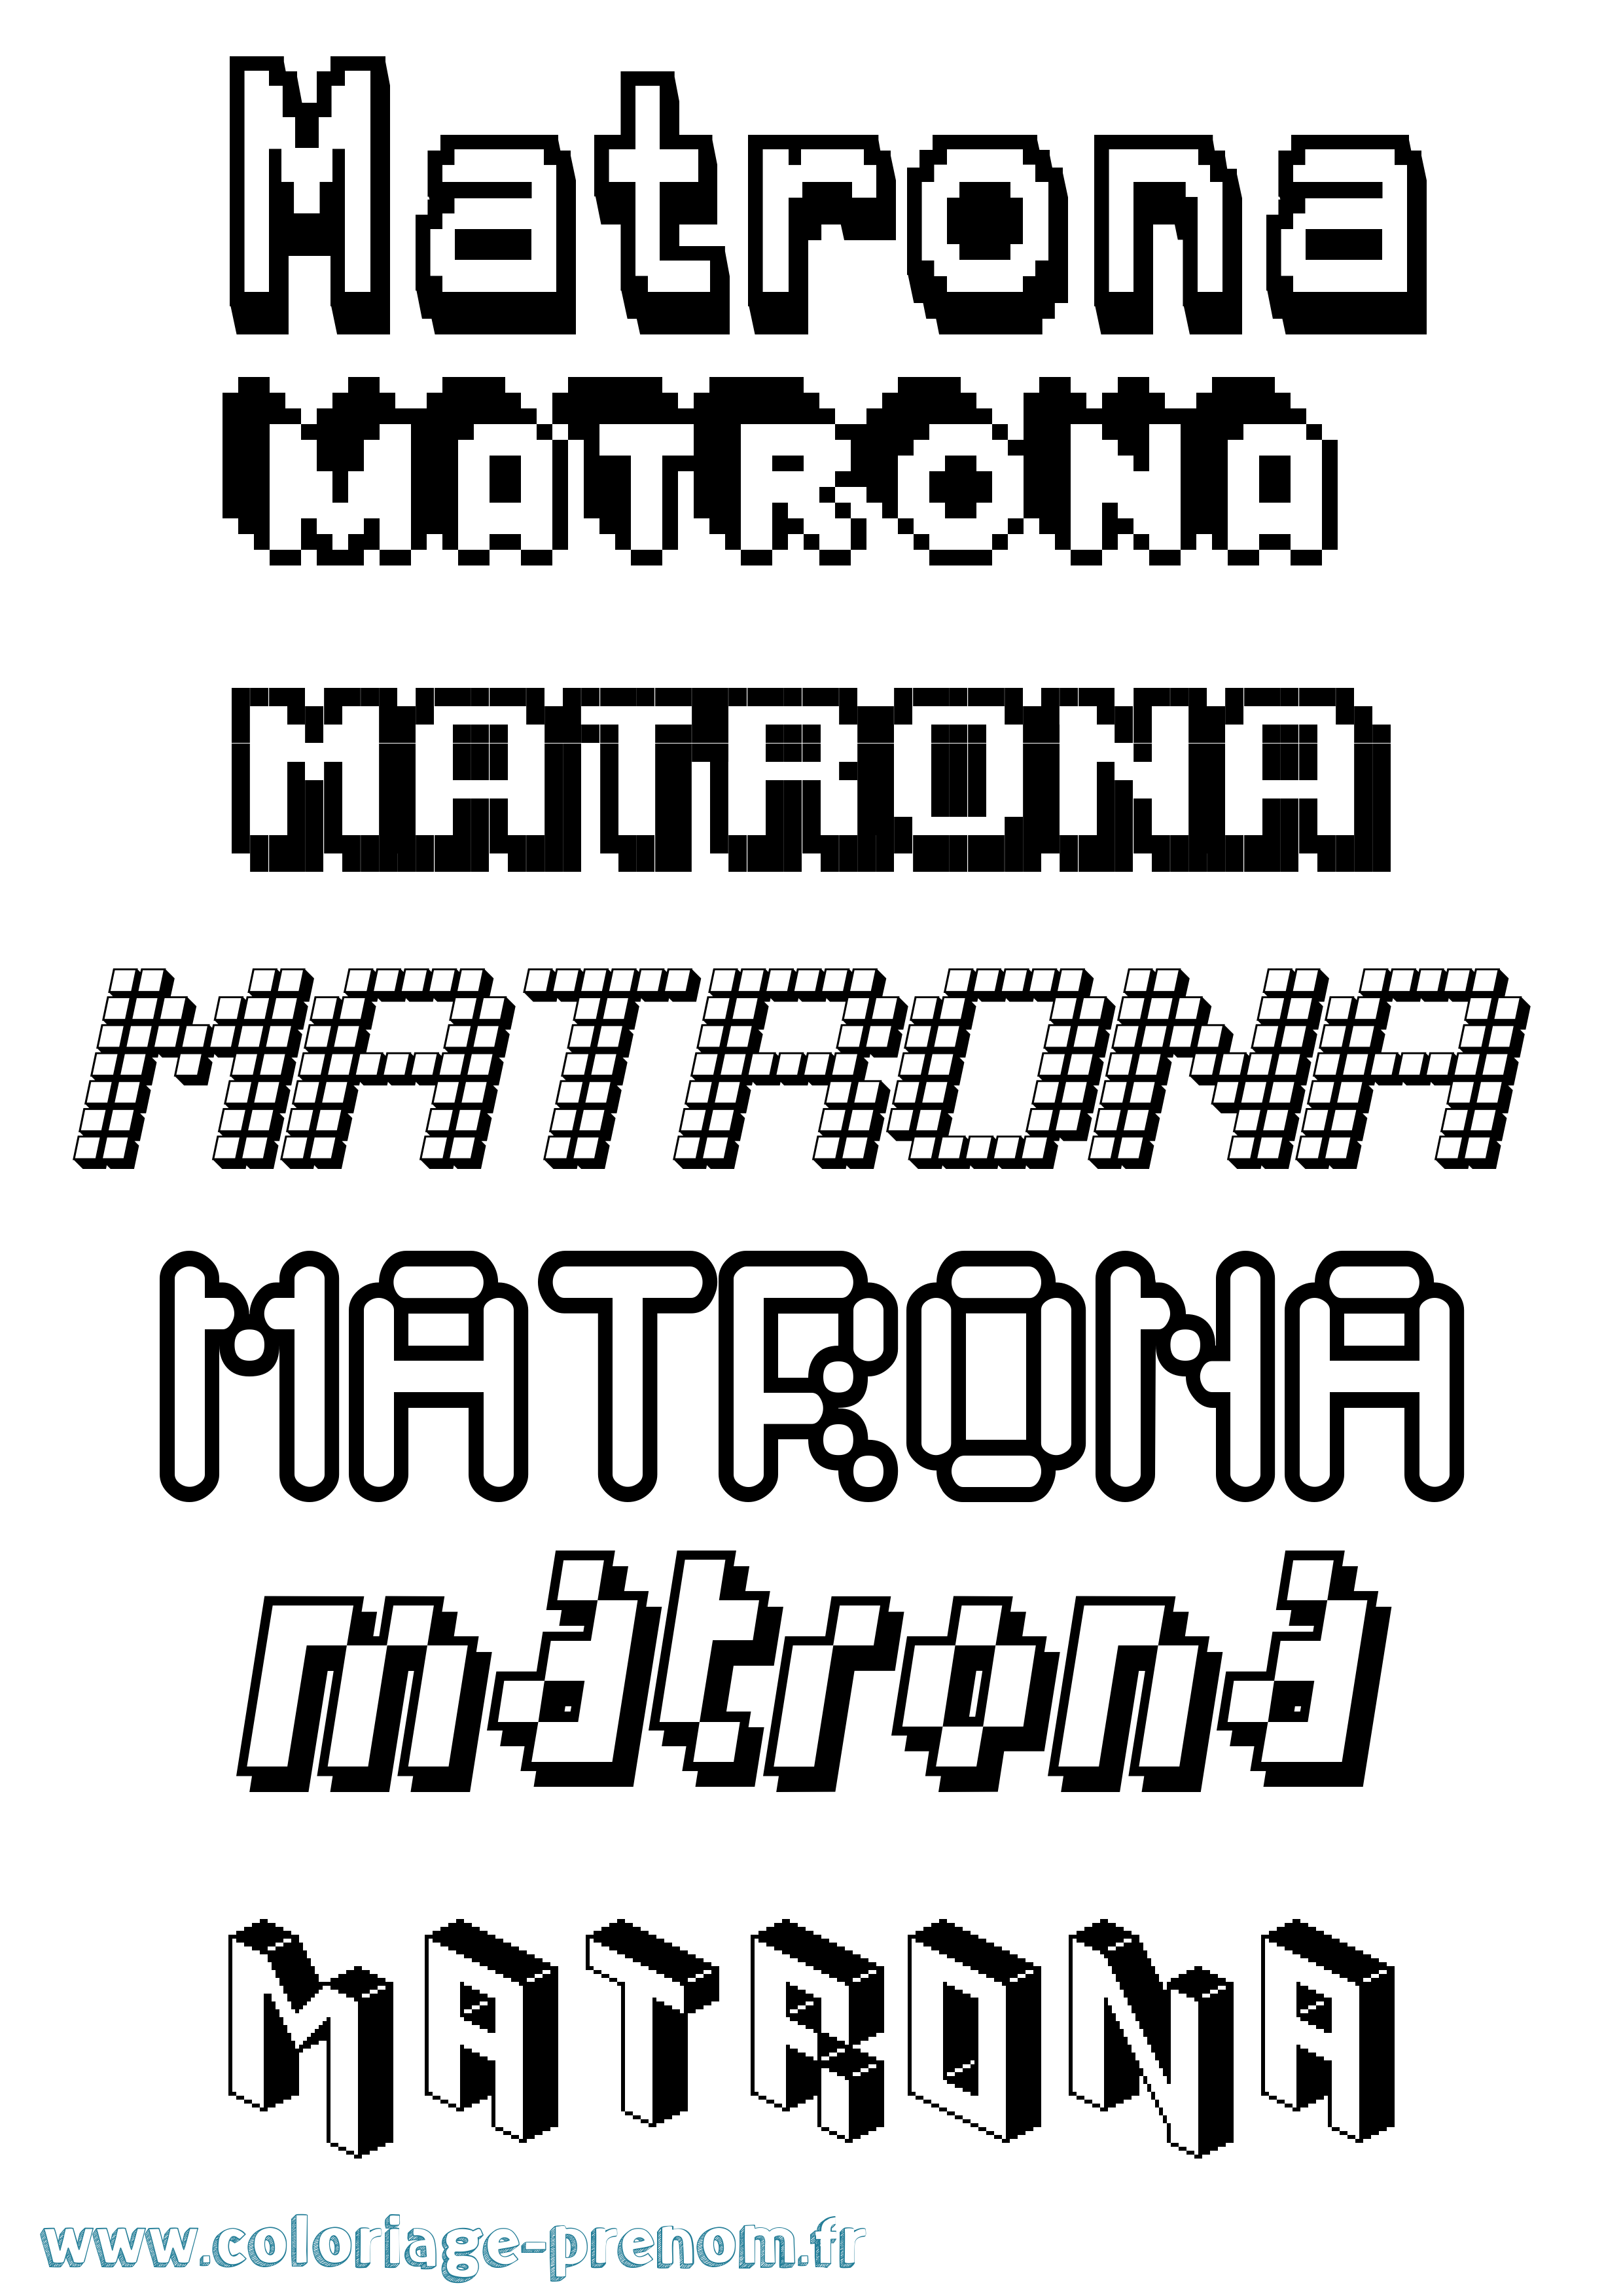 Coloriage prénom Matrona Pixel